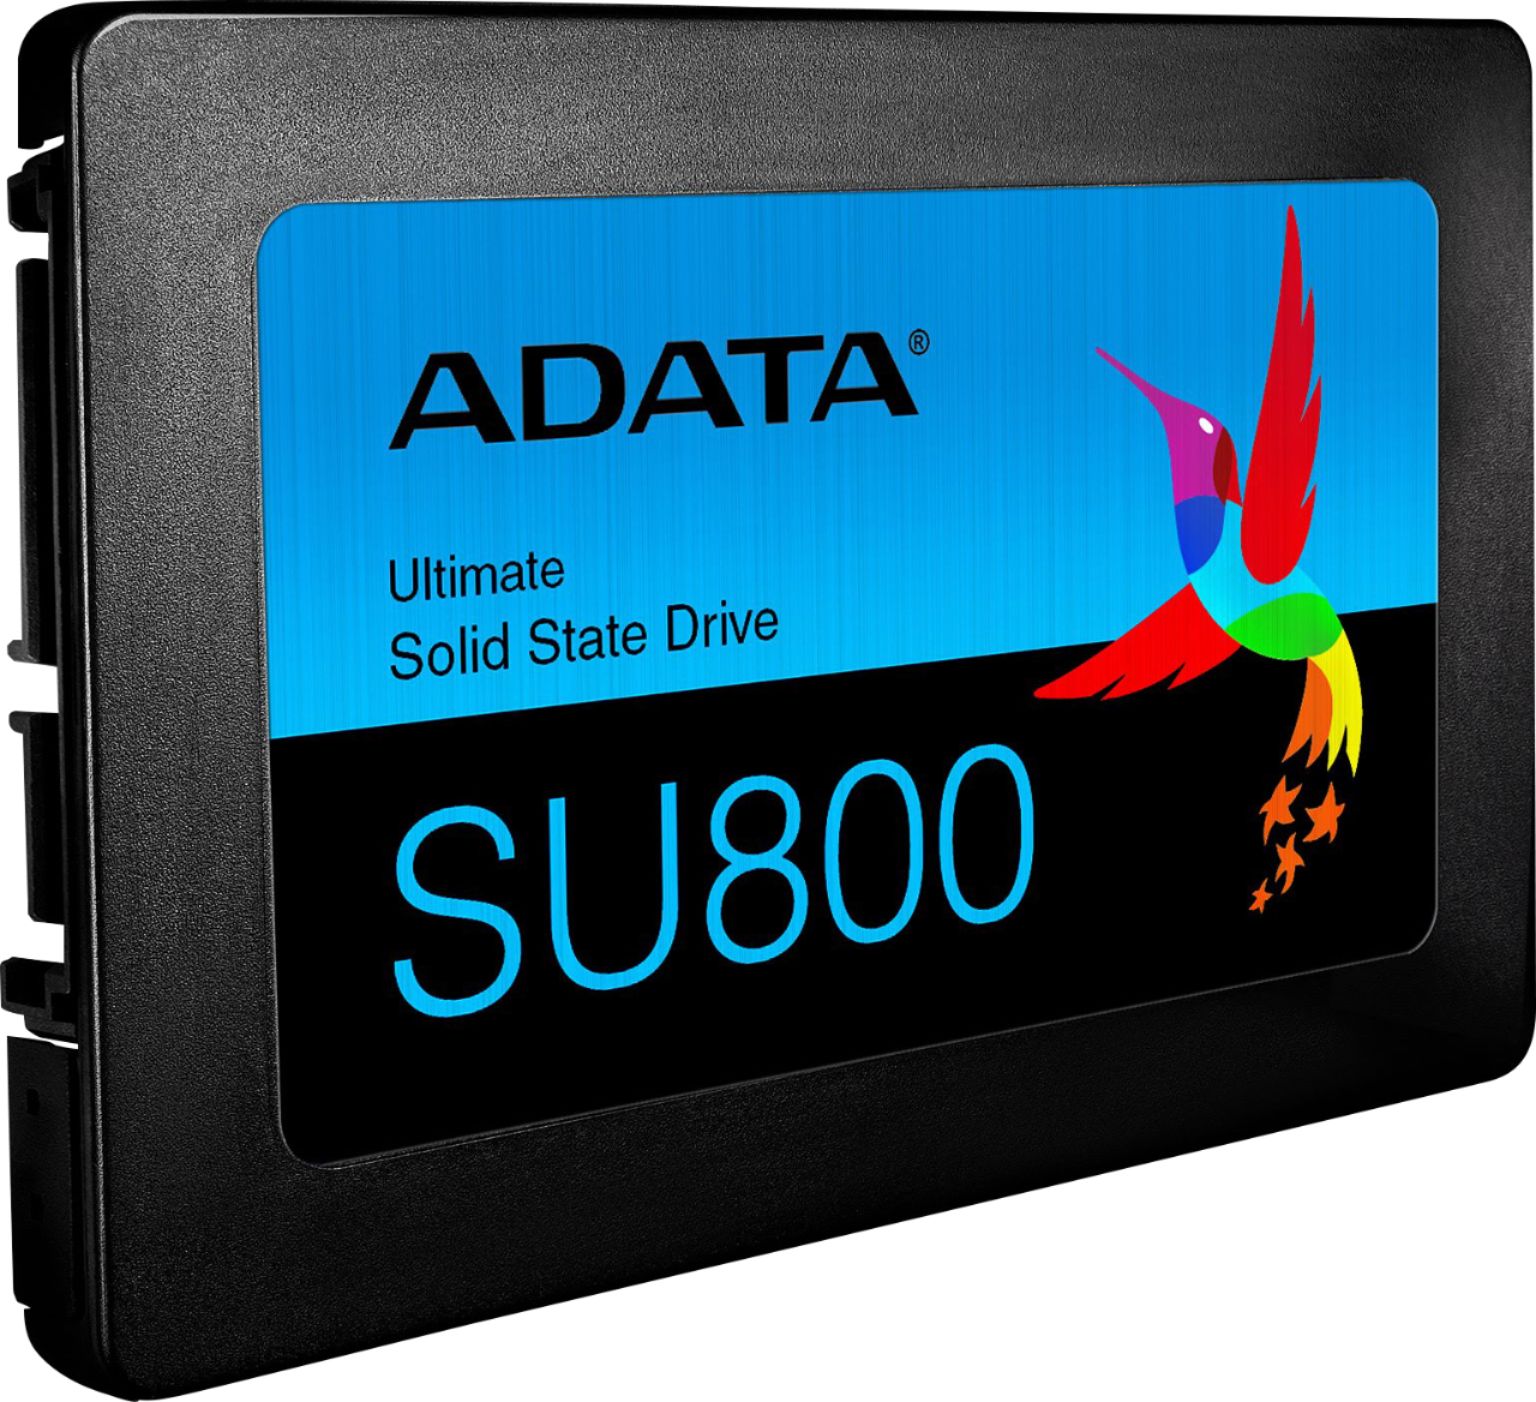 ADATA - Ultimate Series SU800 256GB Internal SATA Solid State Drive